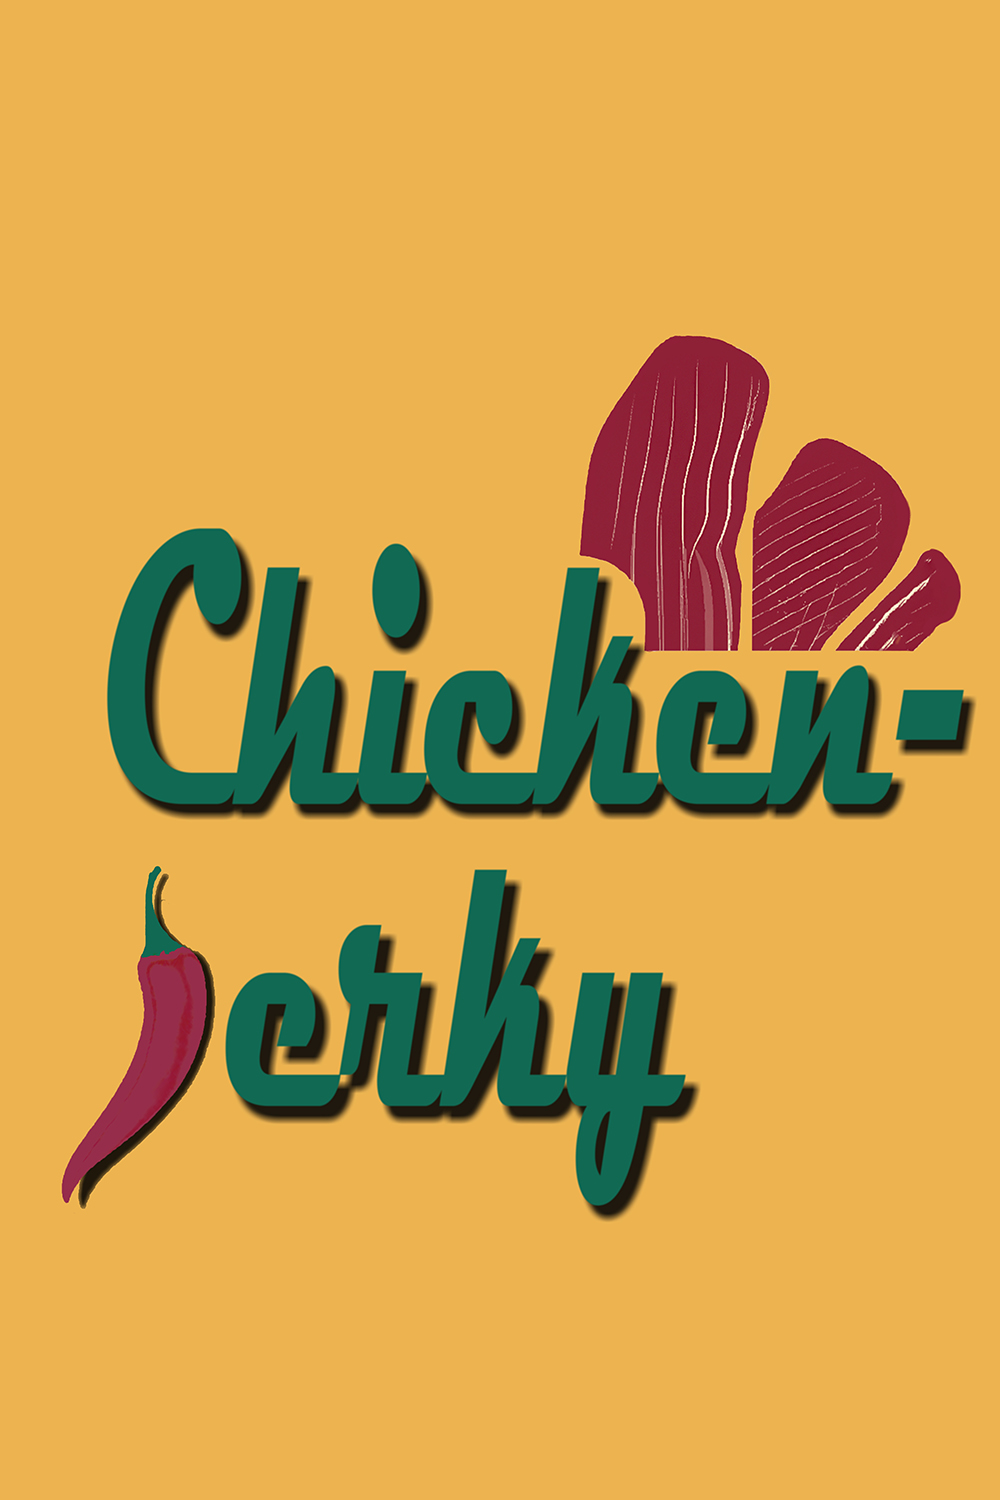 Chicken-jerky logo pinterest preview image.